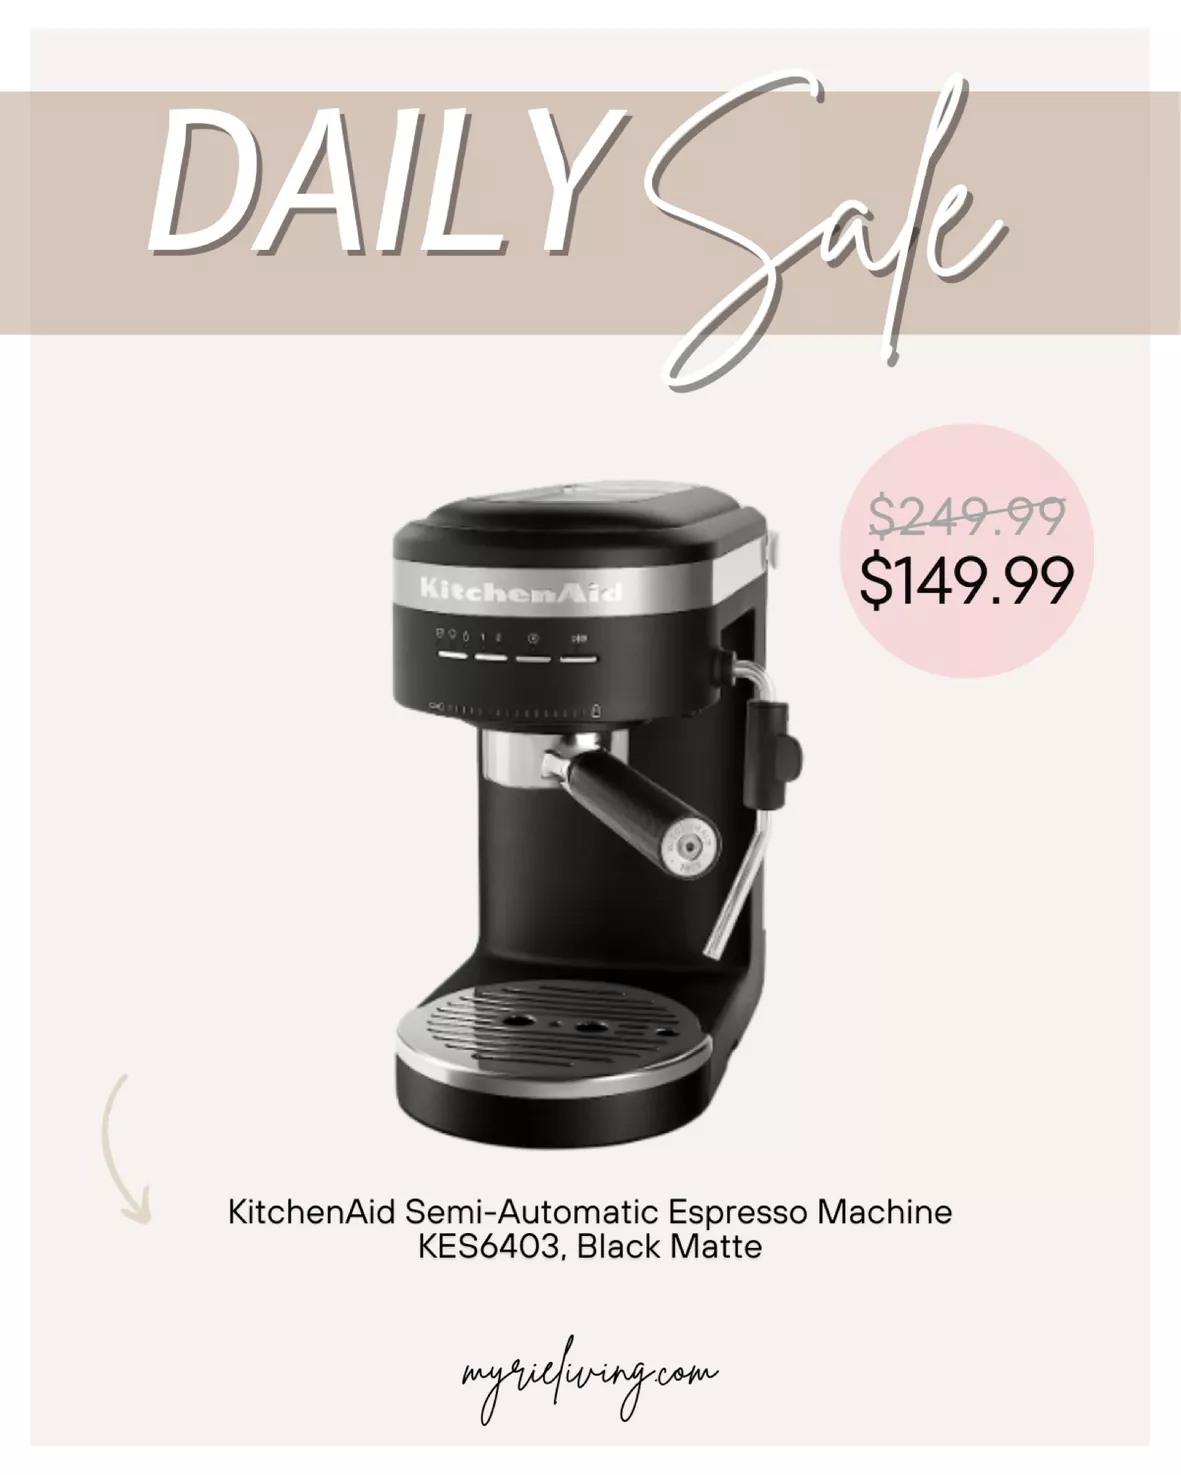  KitchenAid Semi-Automatic Espresso Machine KES6403